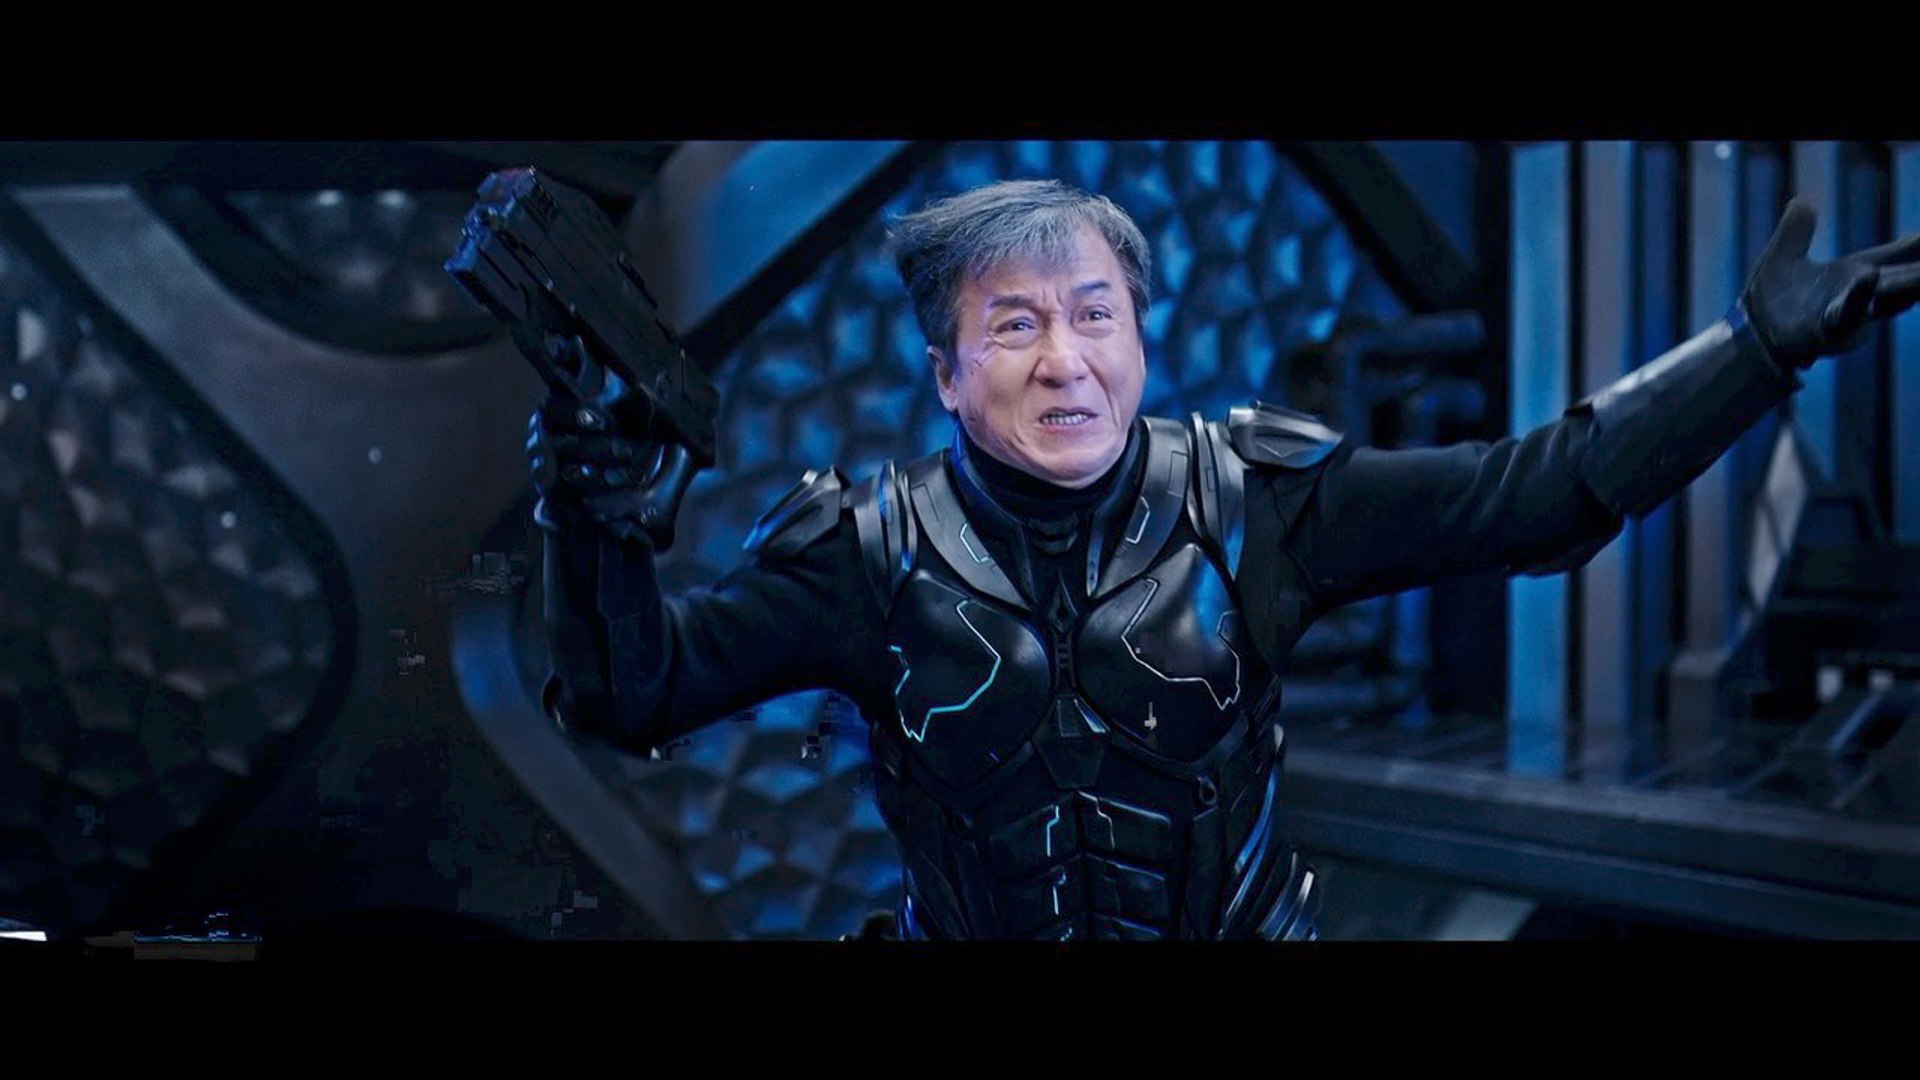 BLEEDING STEEL Official Trailer (2017) Jackie Chan Sci-Fi Movi